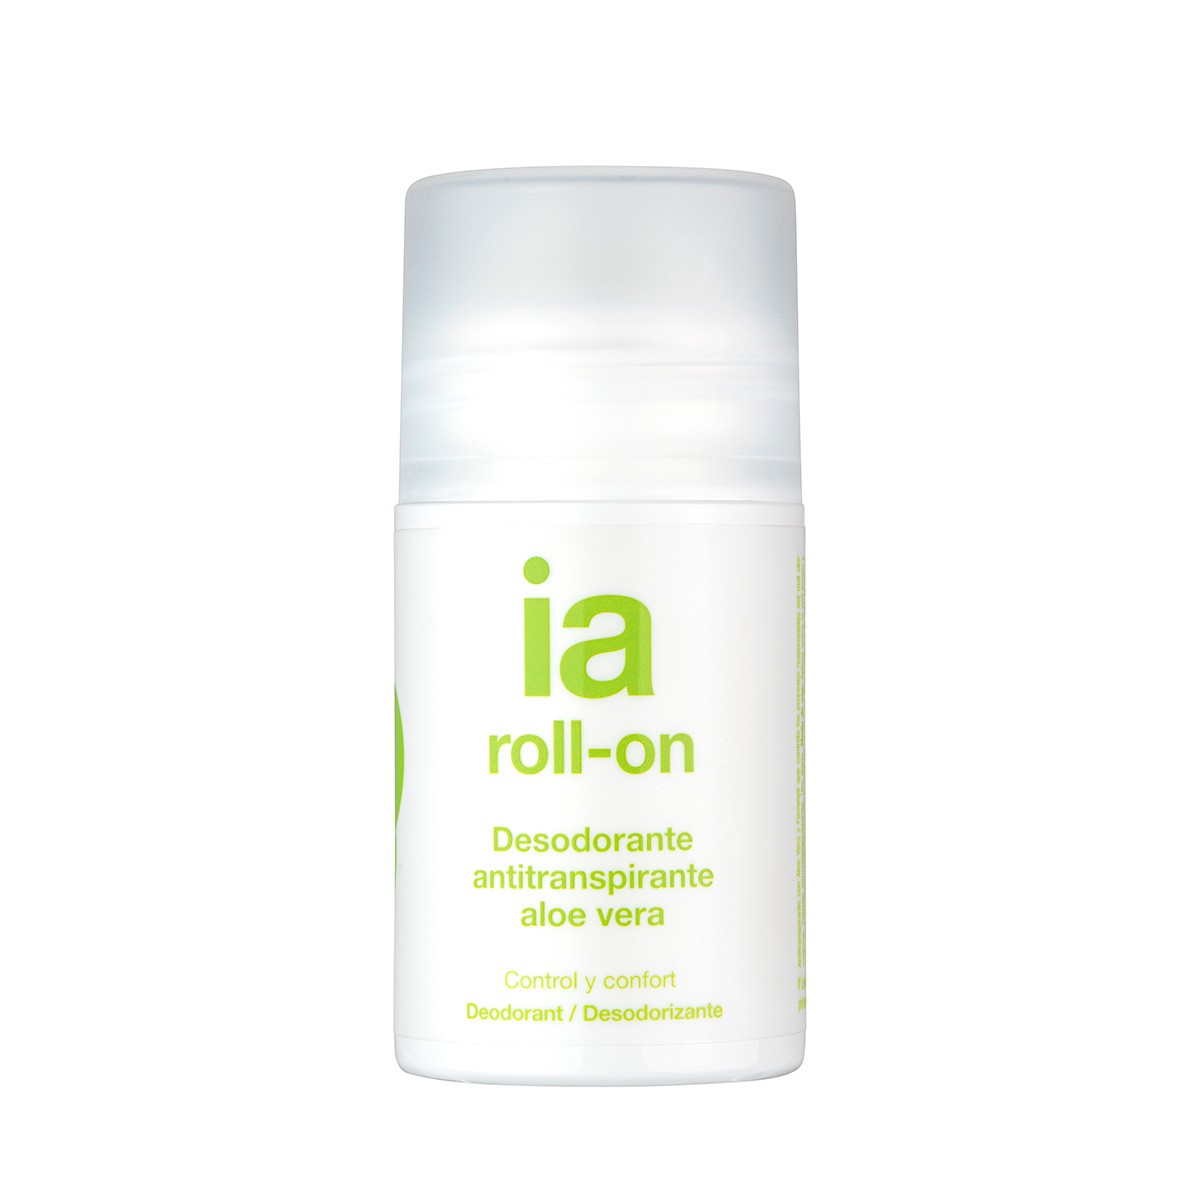 Interapothek desodorante roll-on con aloe sin alcohol 75ml